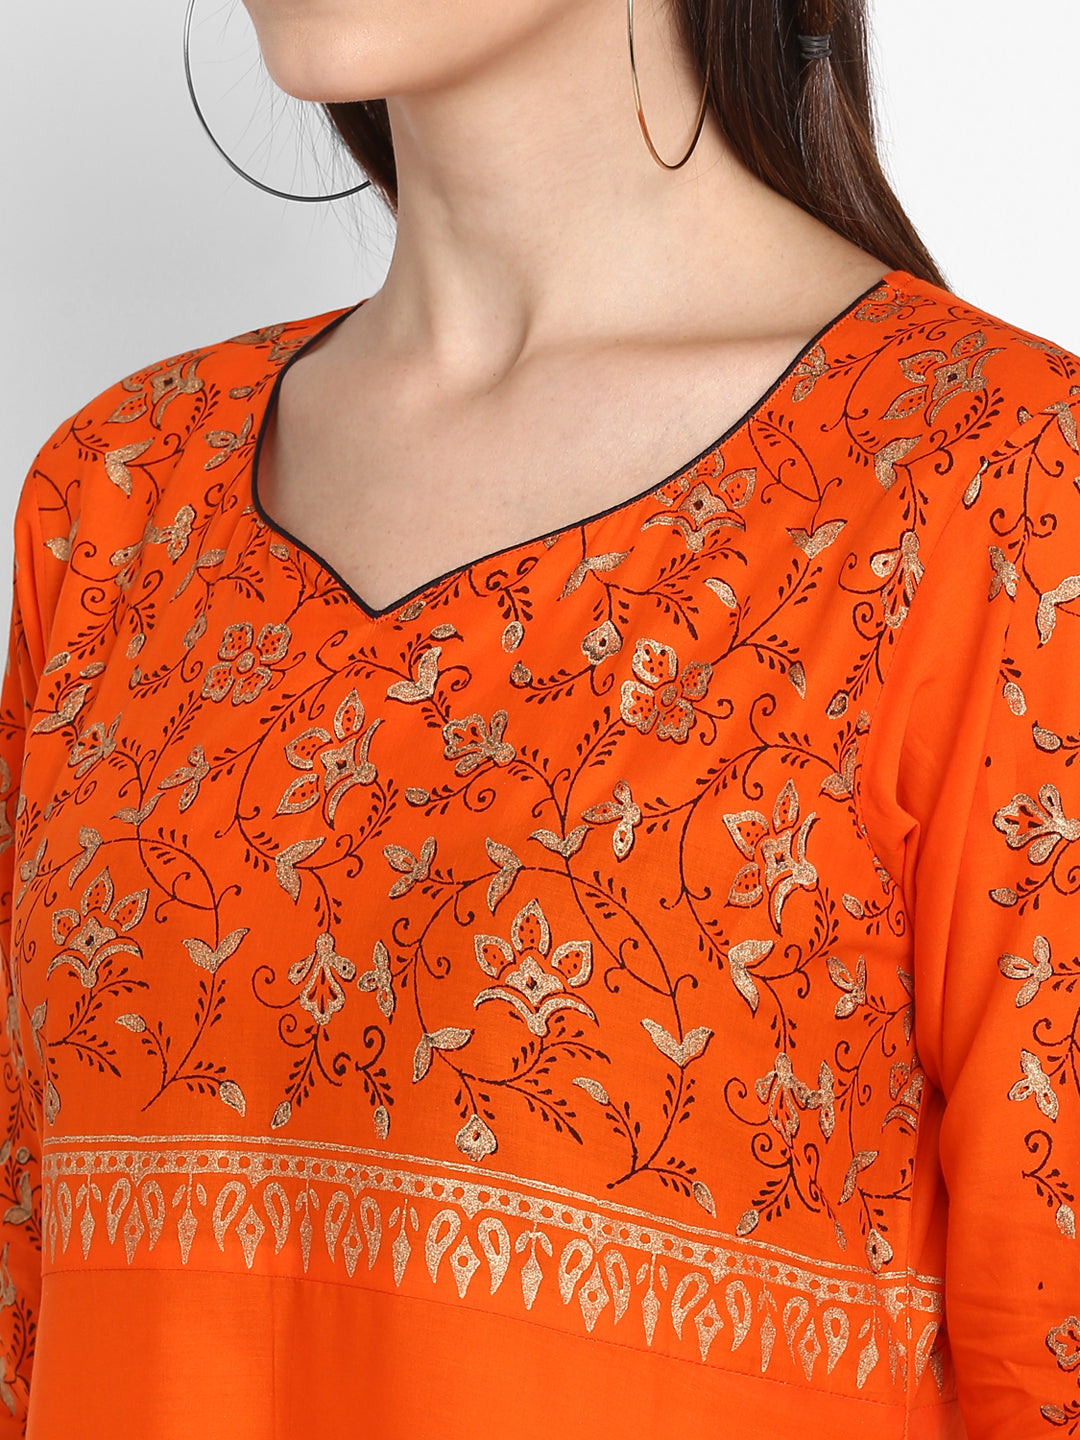 Women's Orange Cotton Printed Anarkali Kurti With Block Print - Wahe-Noor